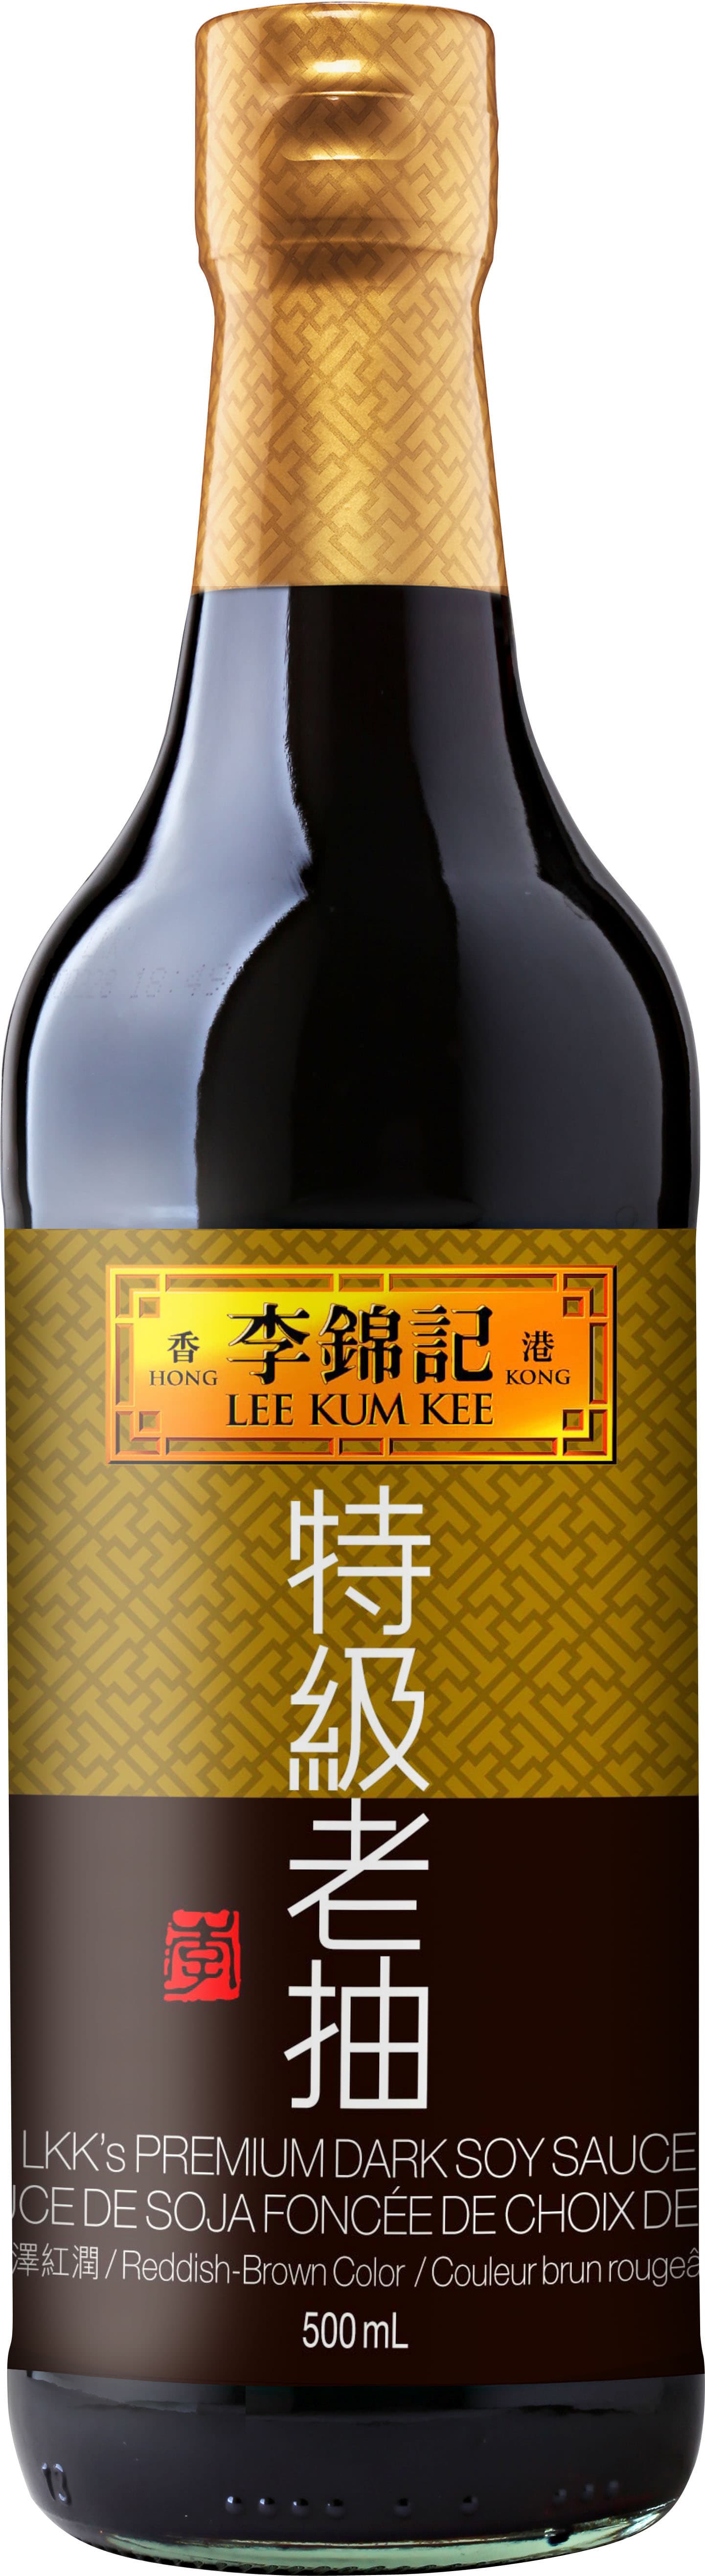 LKK’s Premium Dark Soy Sauce 500ml 